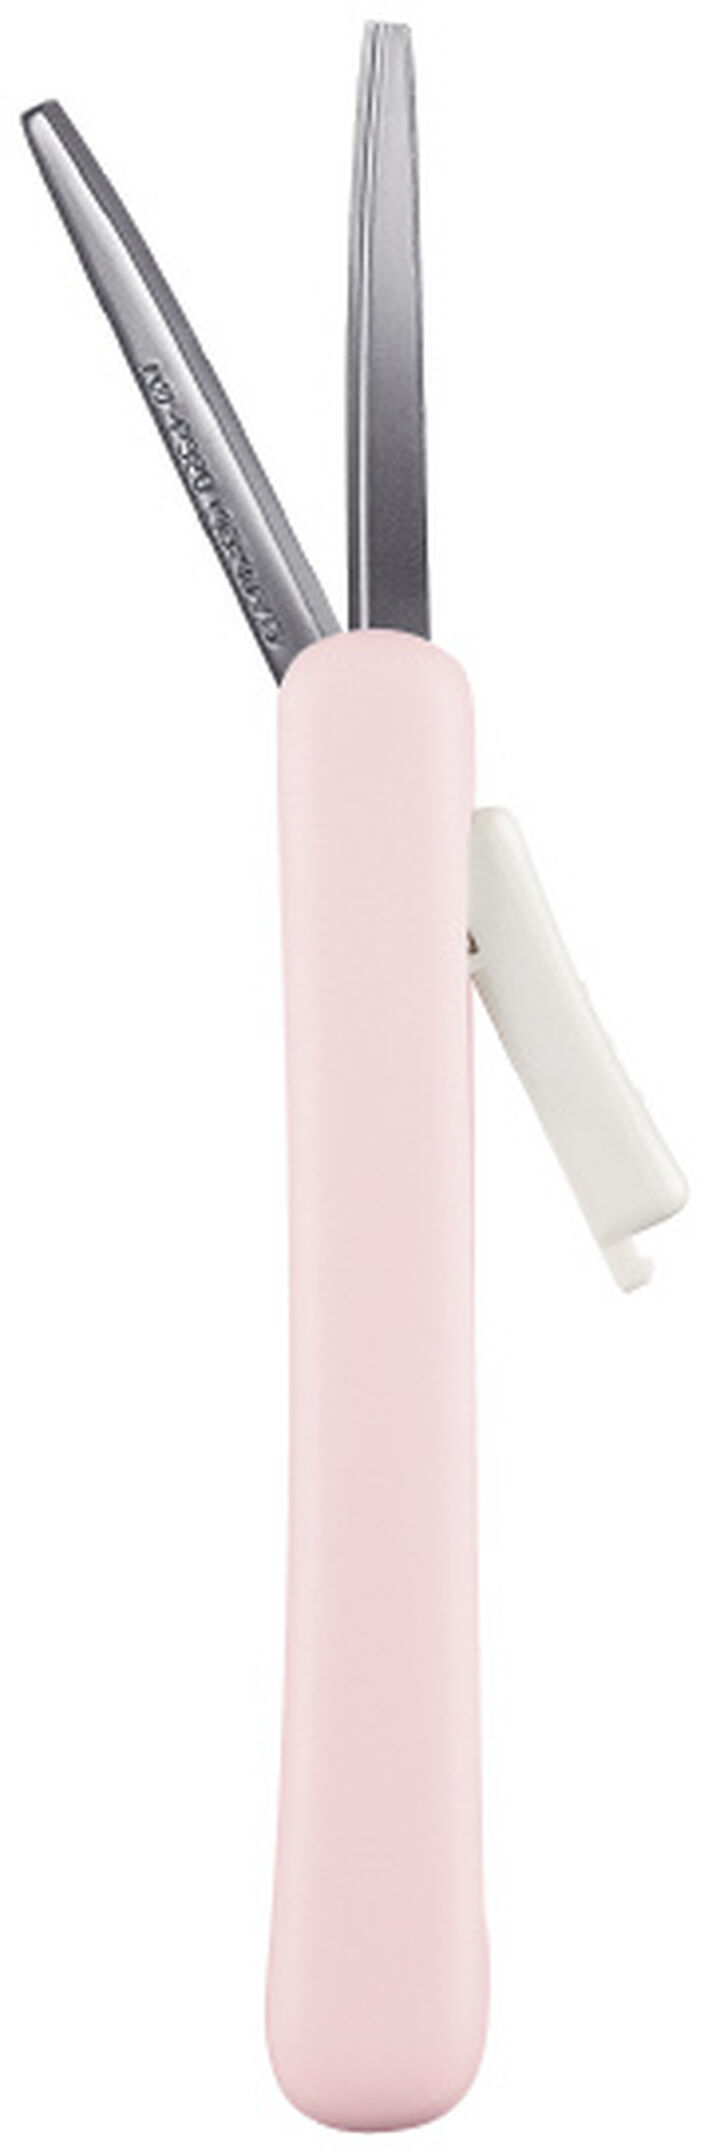 SAXA poche compact scissors Light Pink,Peach, medium image number 2